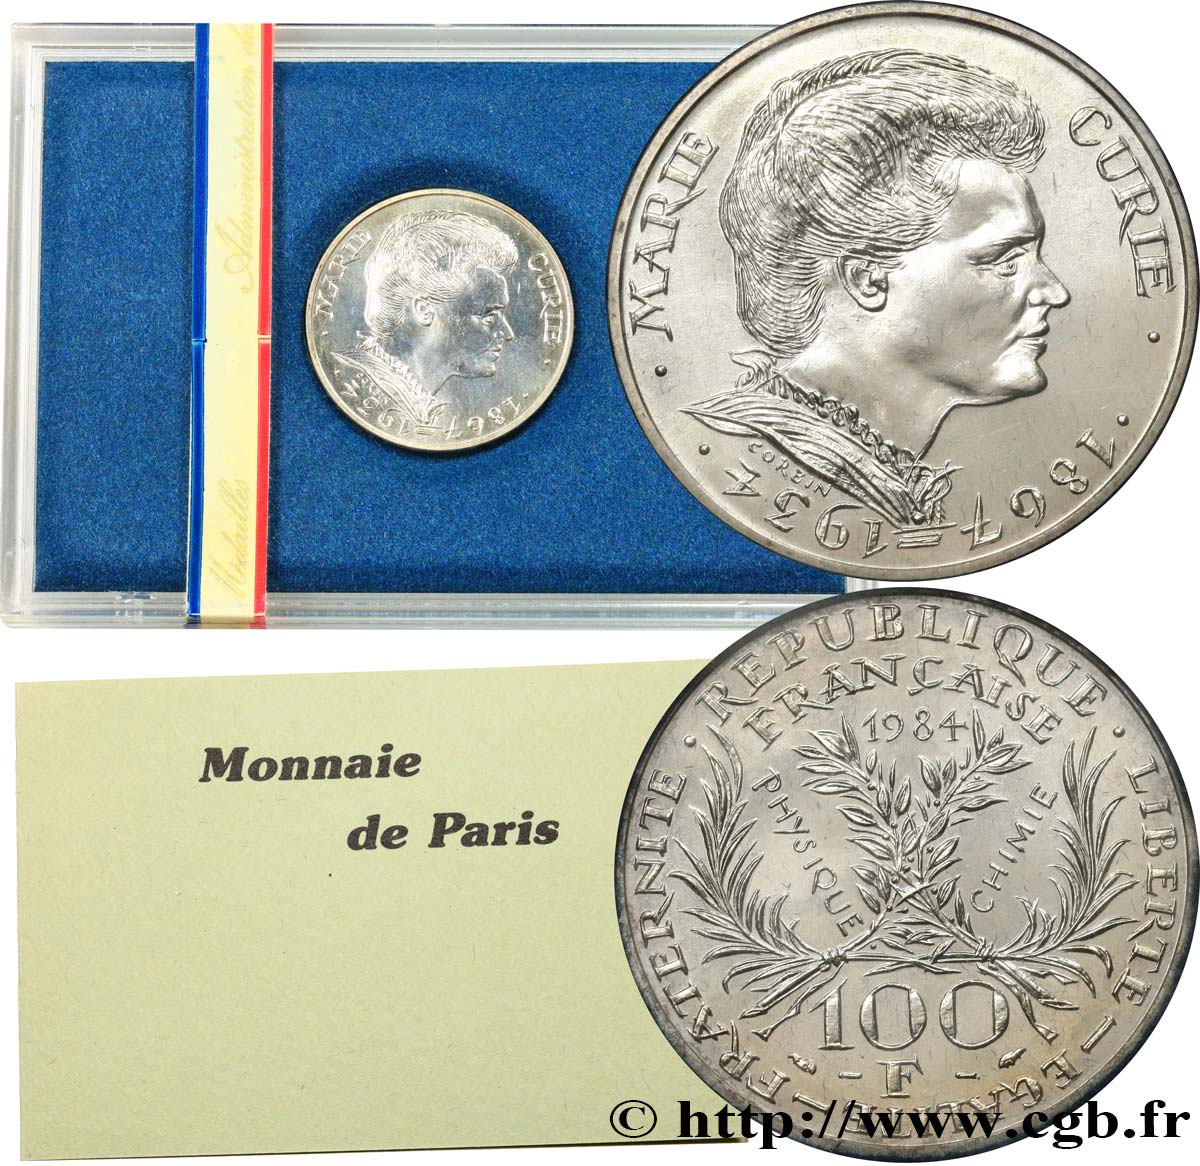 Brillant Universel 100 francs - Marie Curie  1984  F.1600 3 FDC 